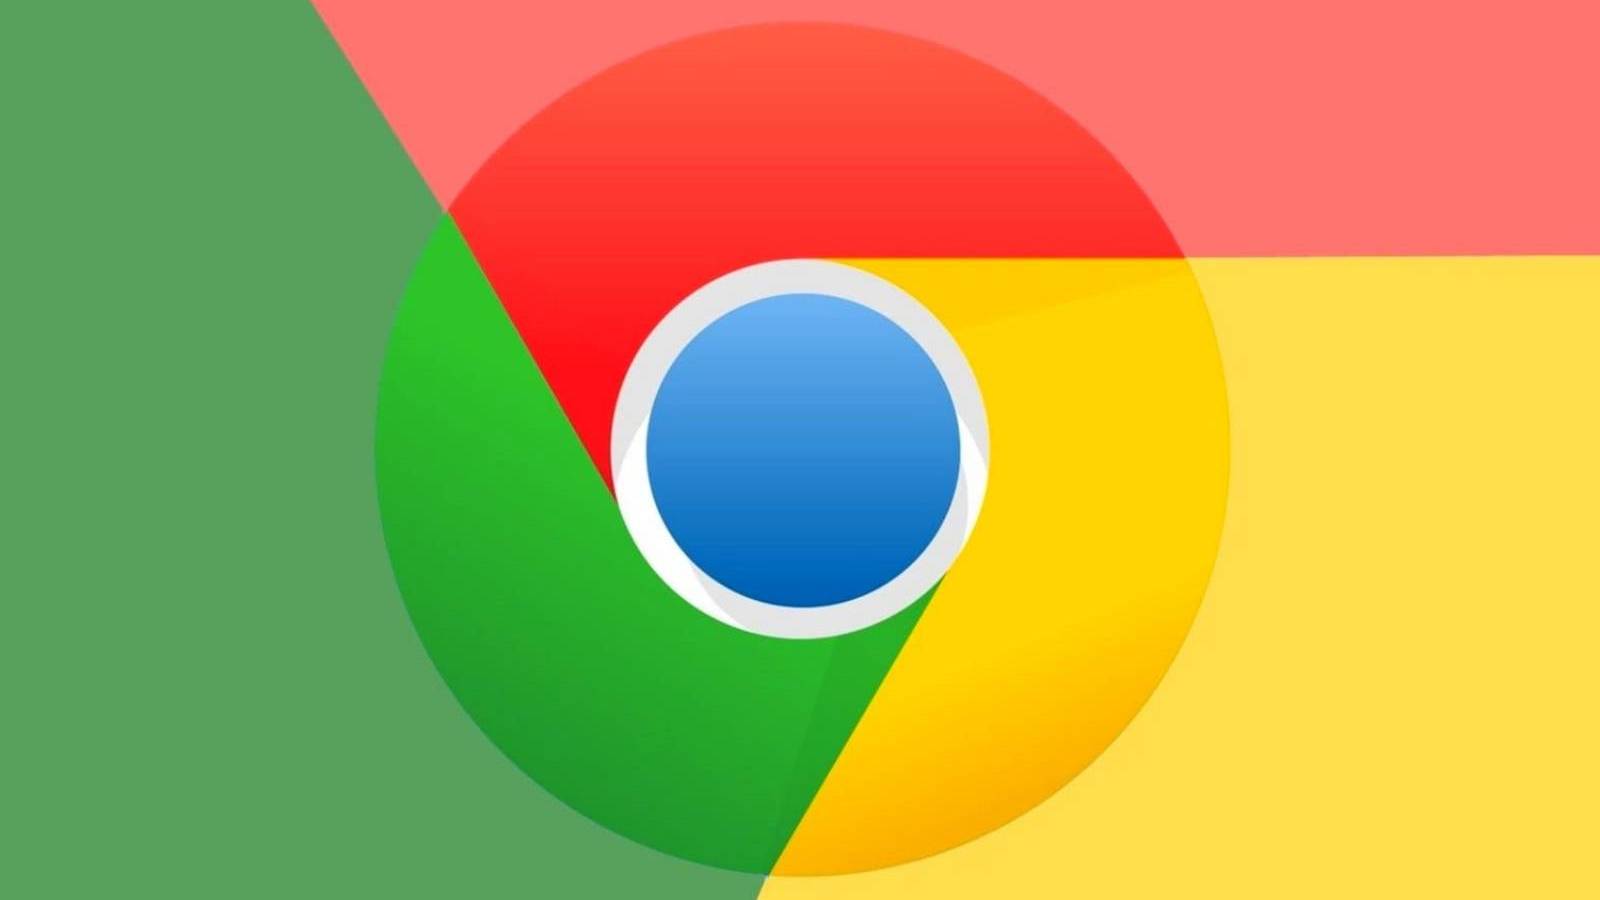 Google Chrome intunecare